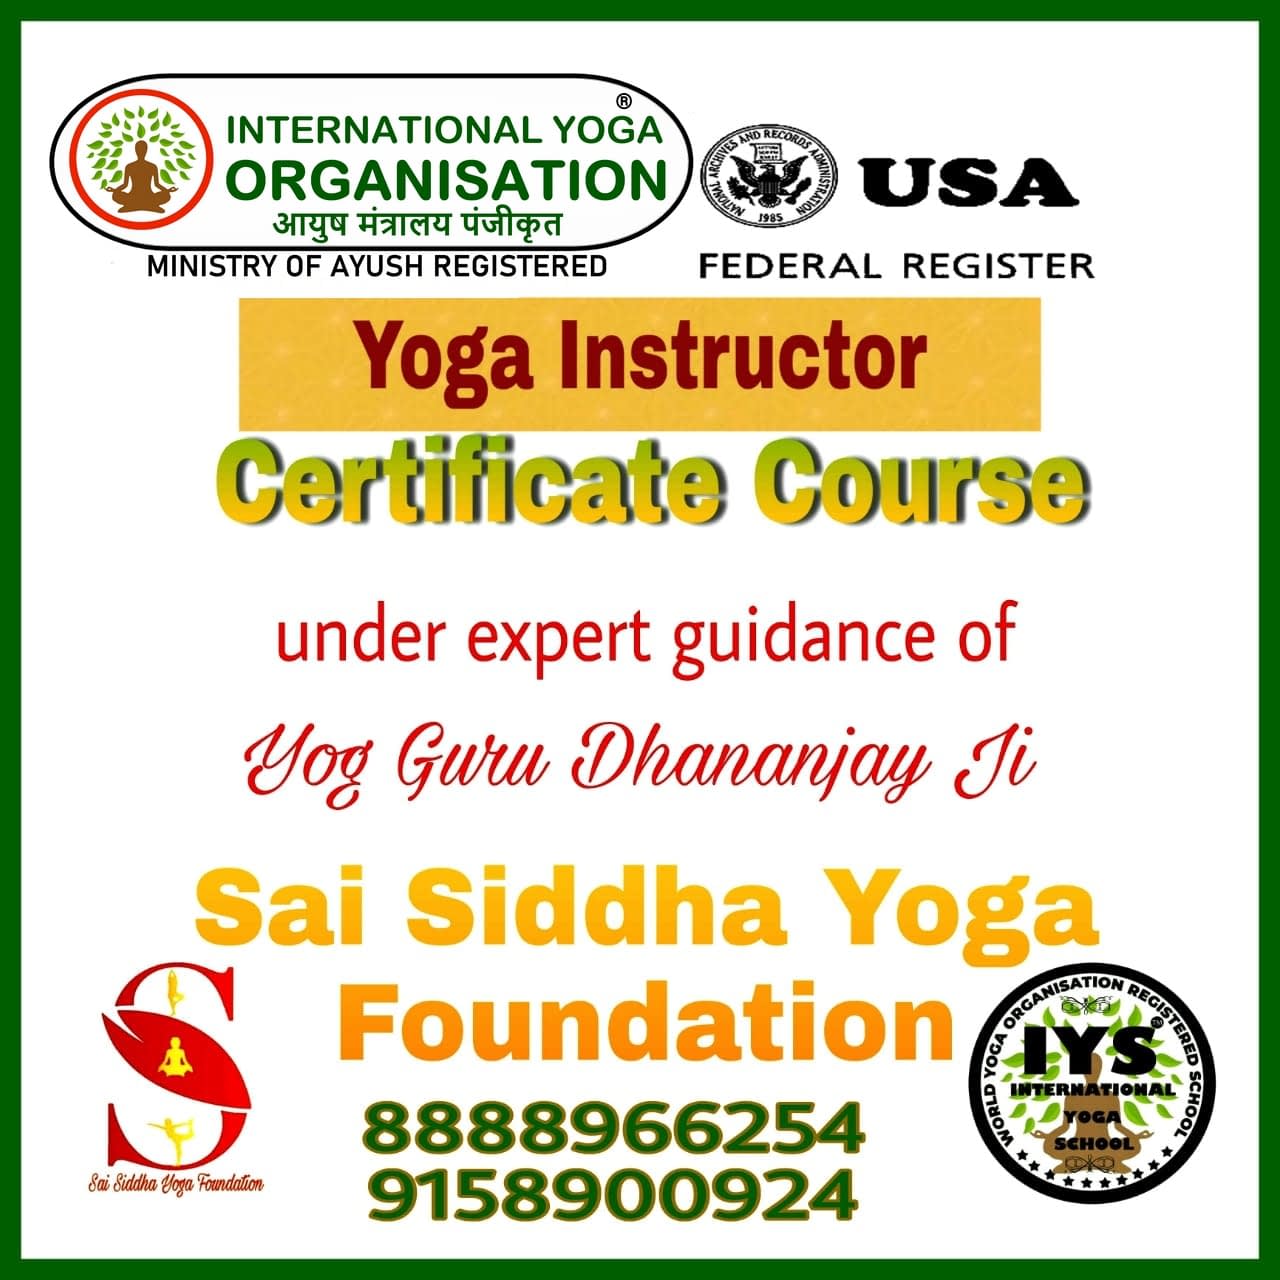 Sai Siddha Yoga Foundation